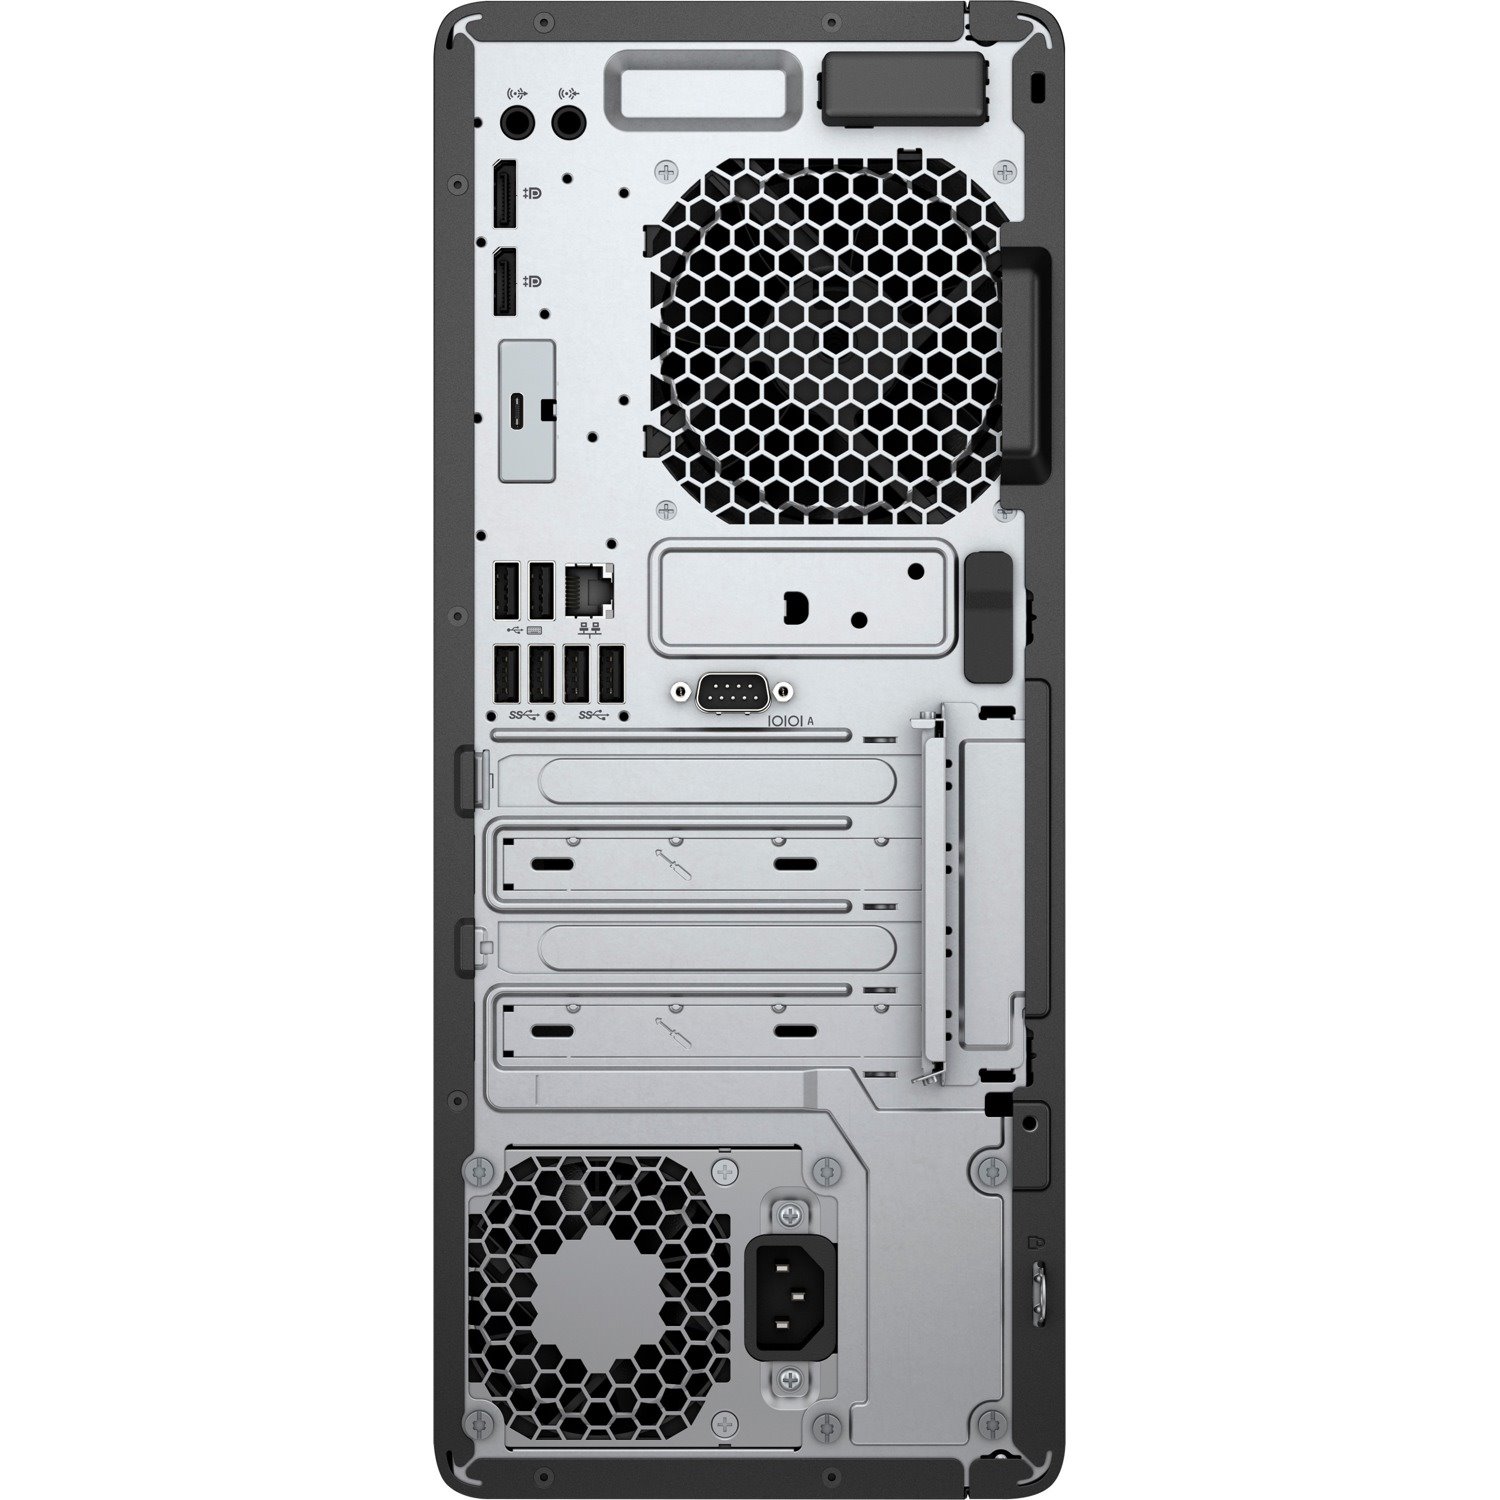 HP Z1 G5 Workstation - Intel Core i7 9th Gen i7-9700 - 16 GB - 512 GB SSD - Tower